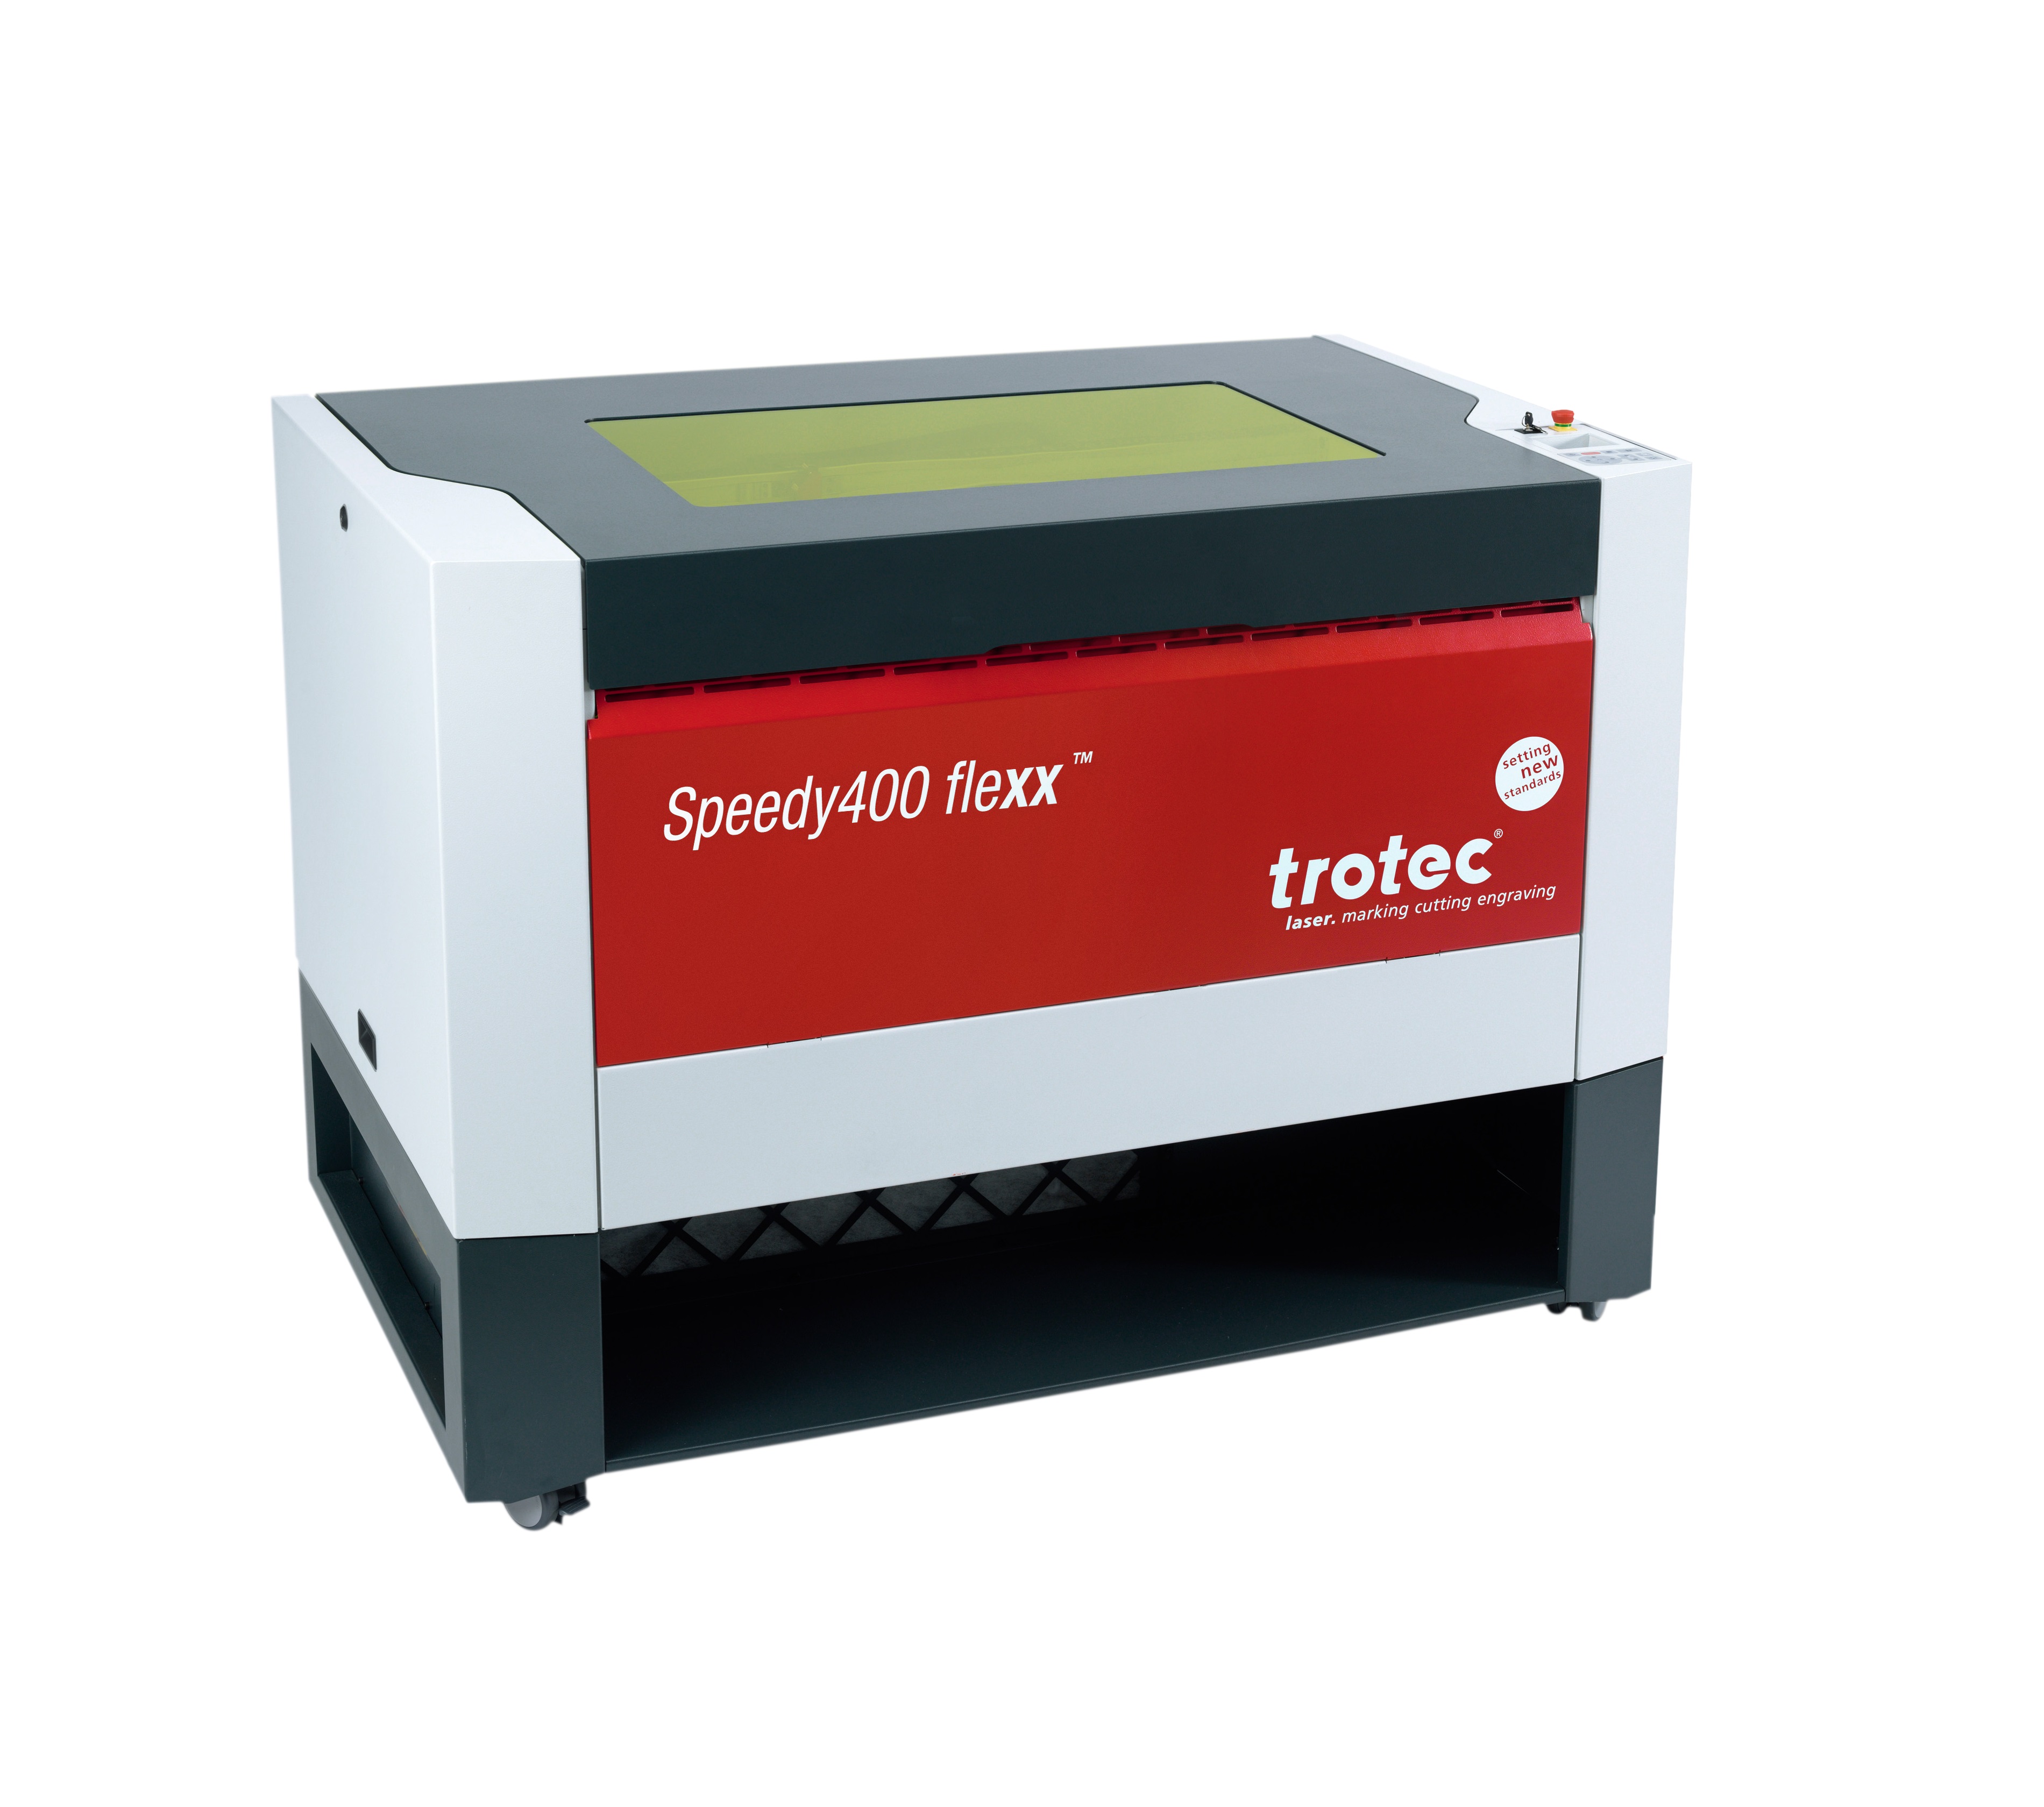 Echipament gravura laser Trotec Speedy 400 Flexx - Echipamente gravare laser - Echipamente - Produse